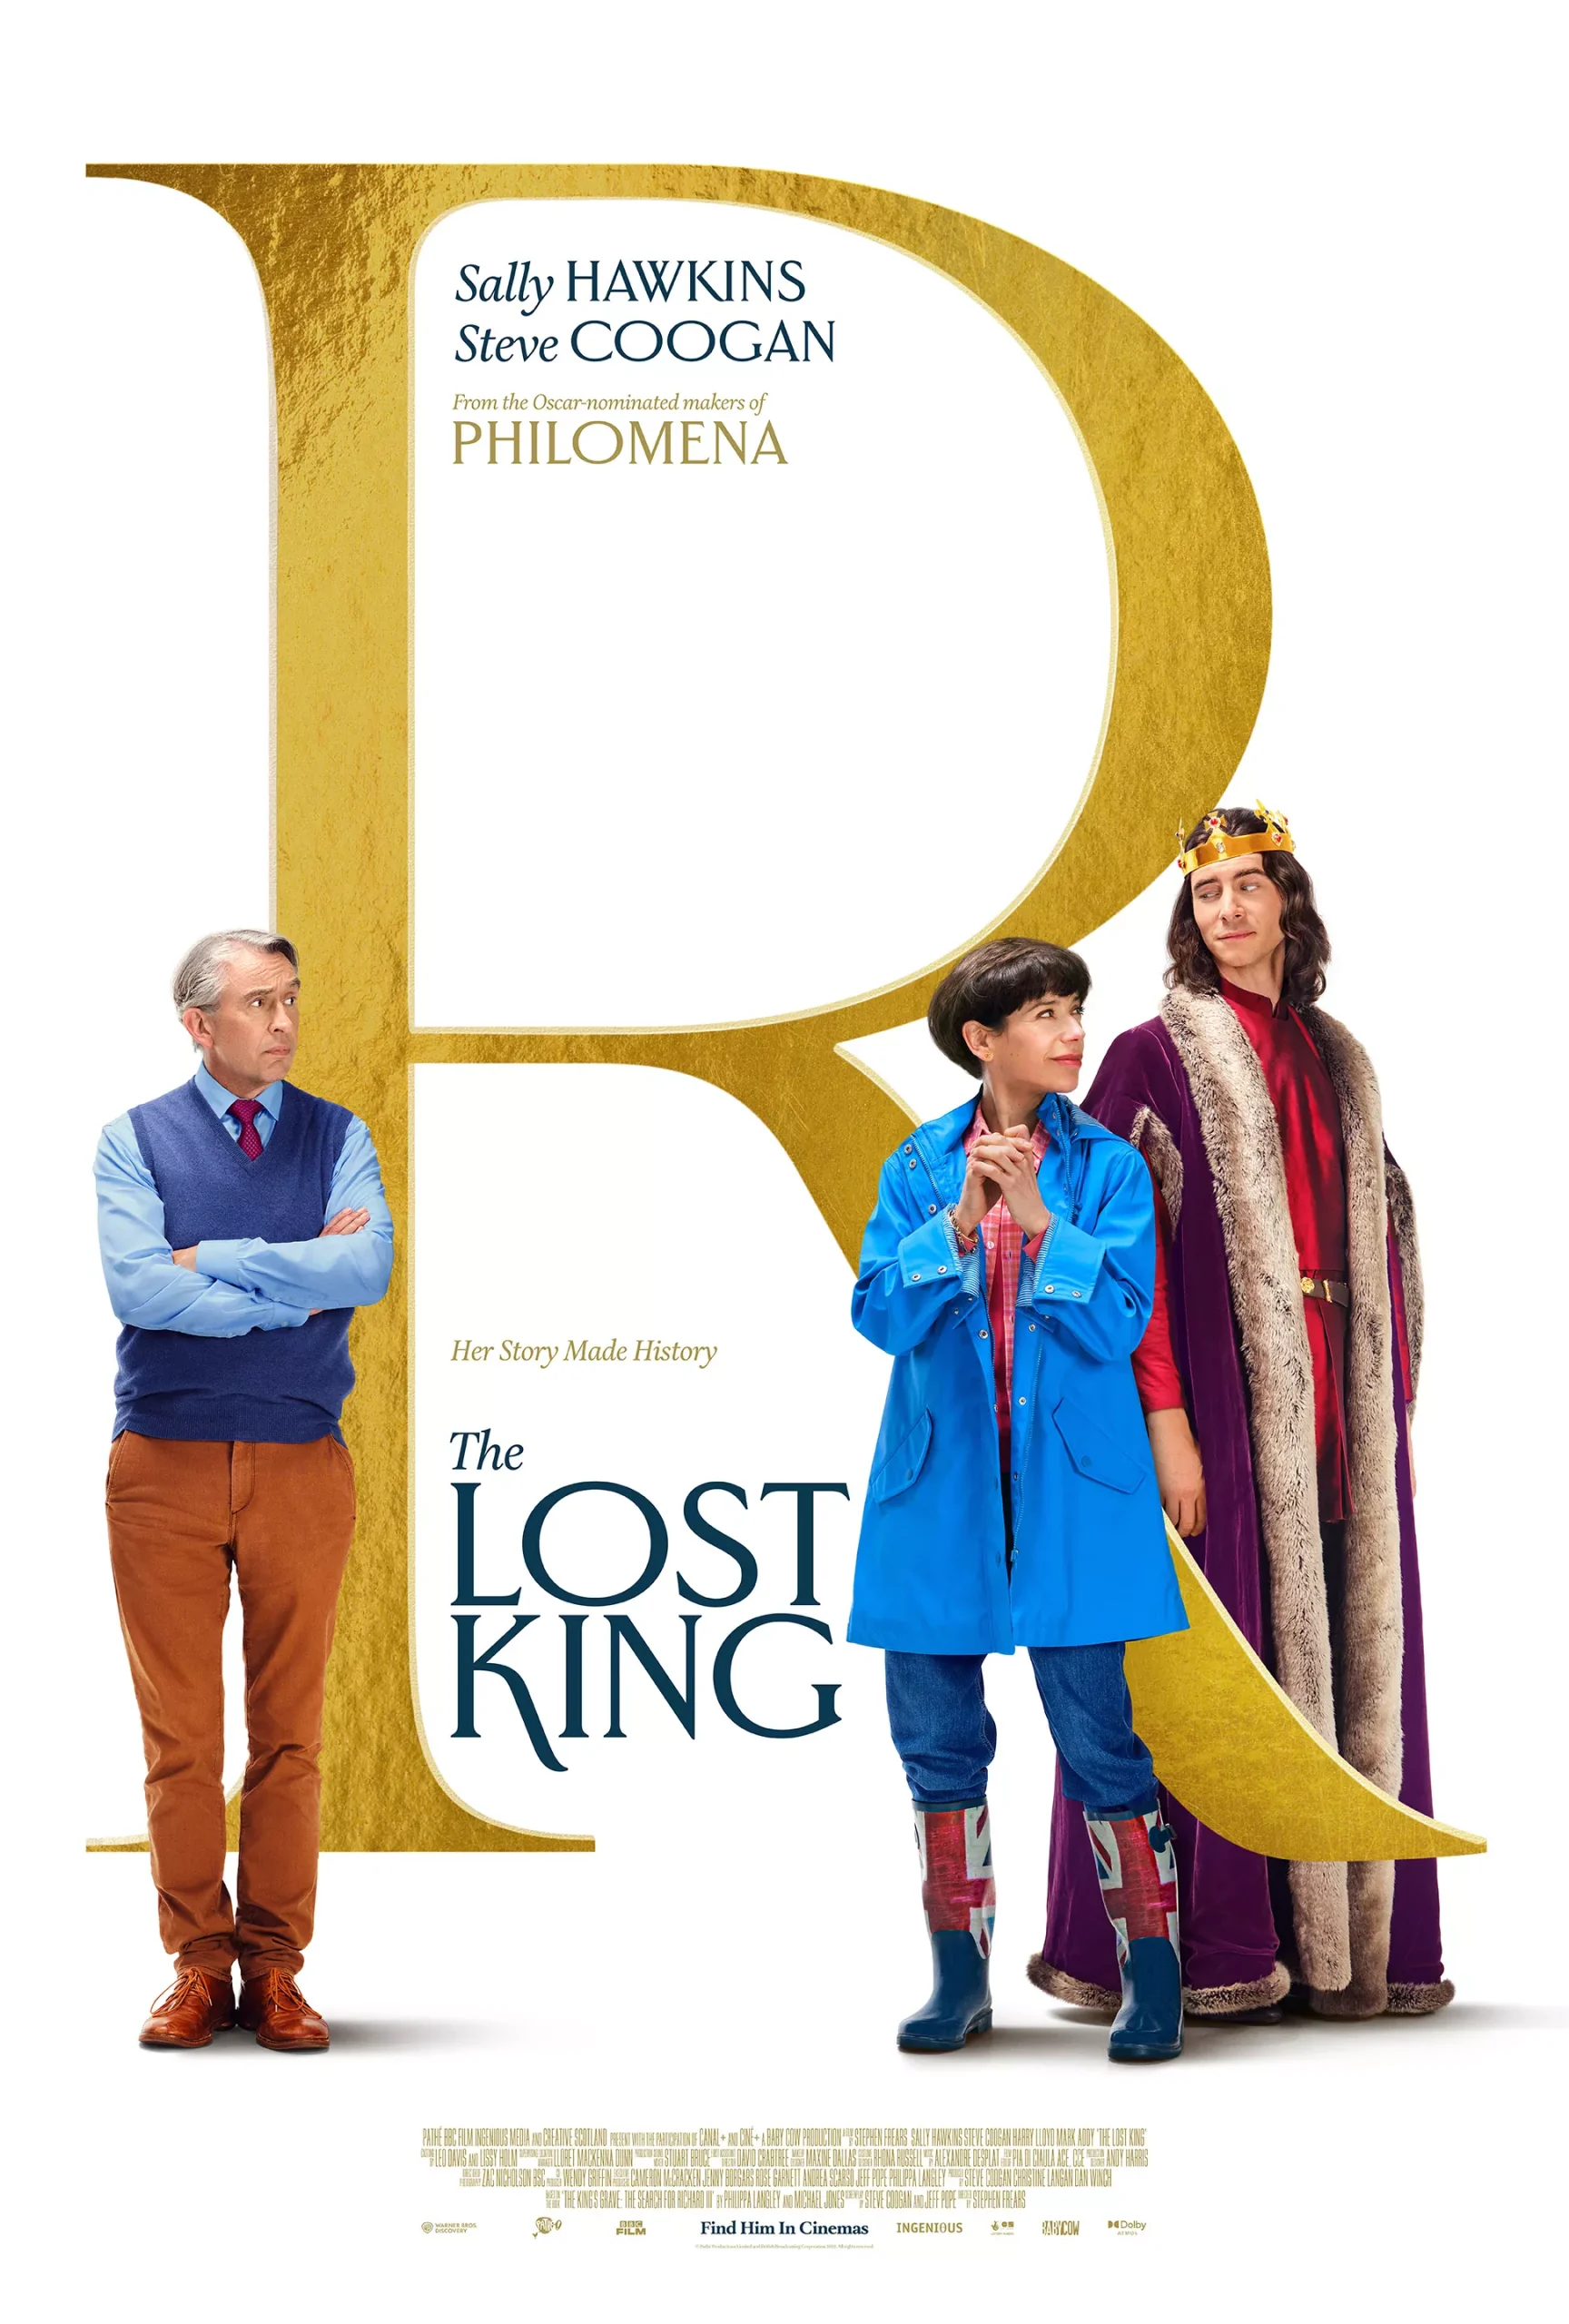 Trailer Από Το Δραματικό "The Lost King"